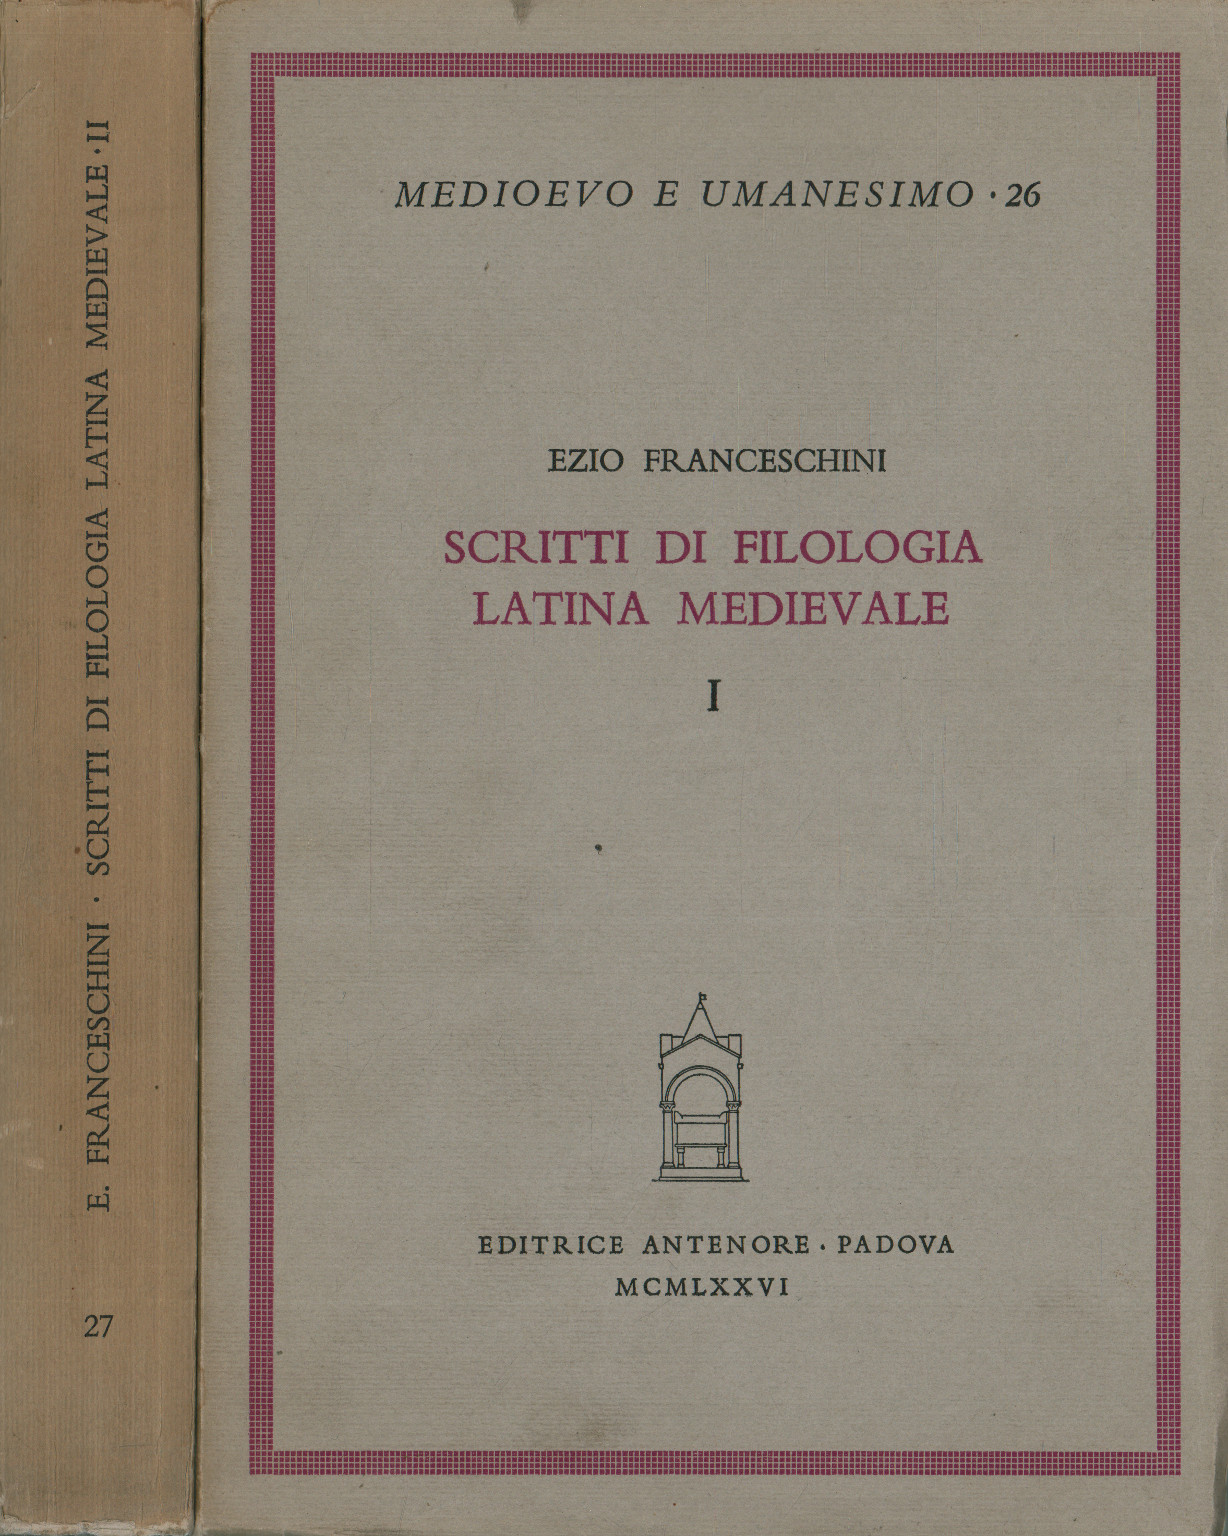 Writings of medieval Latin philosophy (2 Volumes), Ezio Franceschini, Writings of medieval Latin philology (2